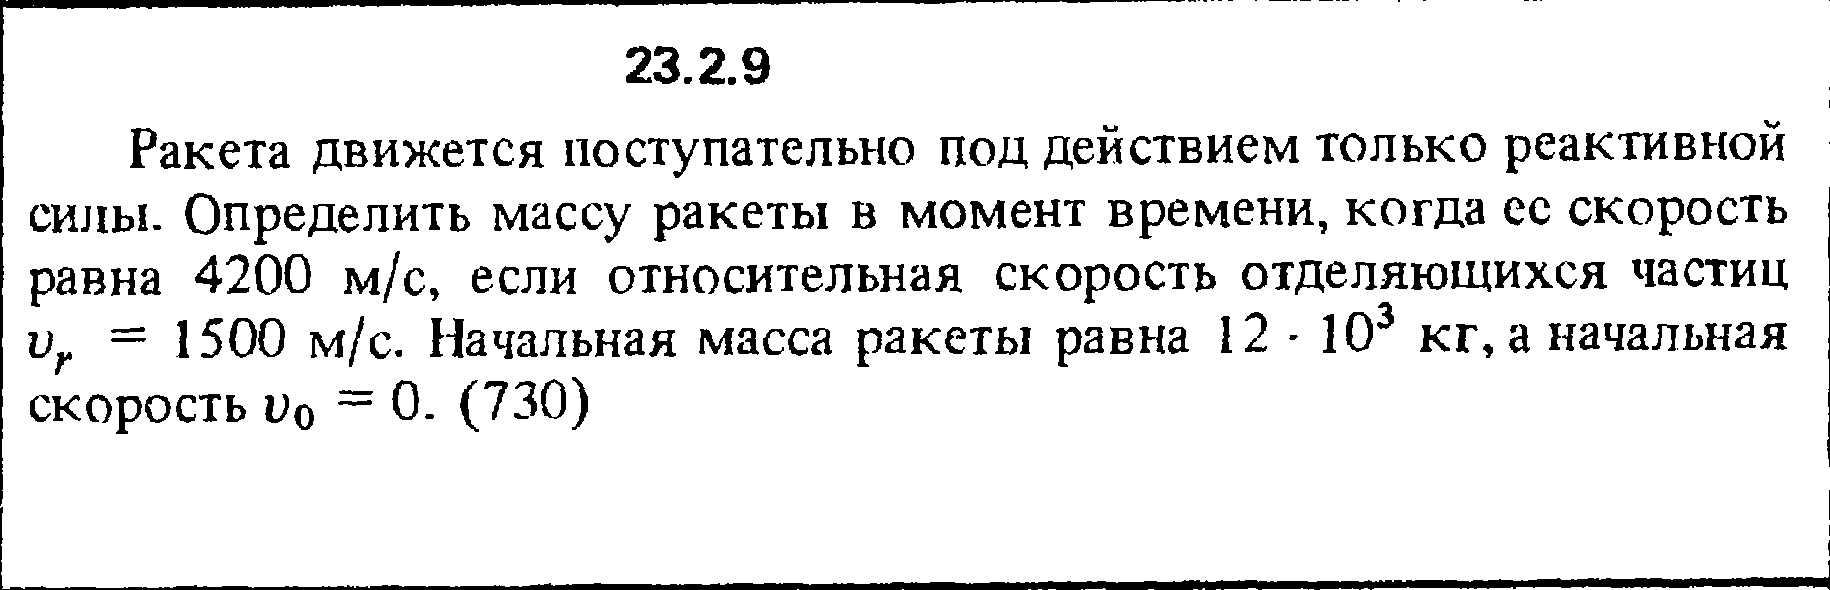 Решение 23.2.9 из сборника (решебника) Кепе О.Е. 1989